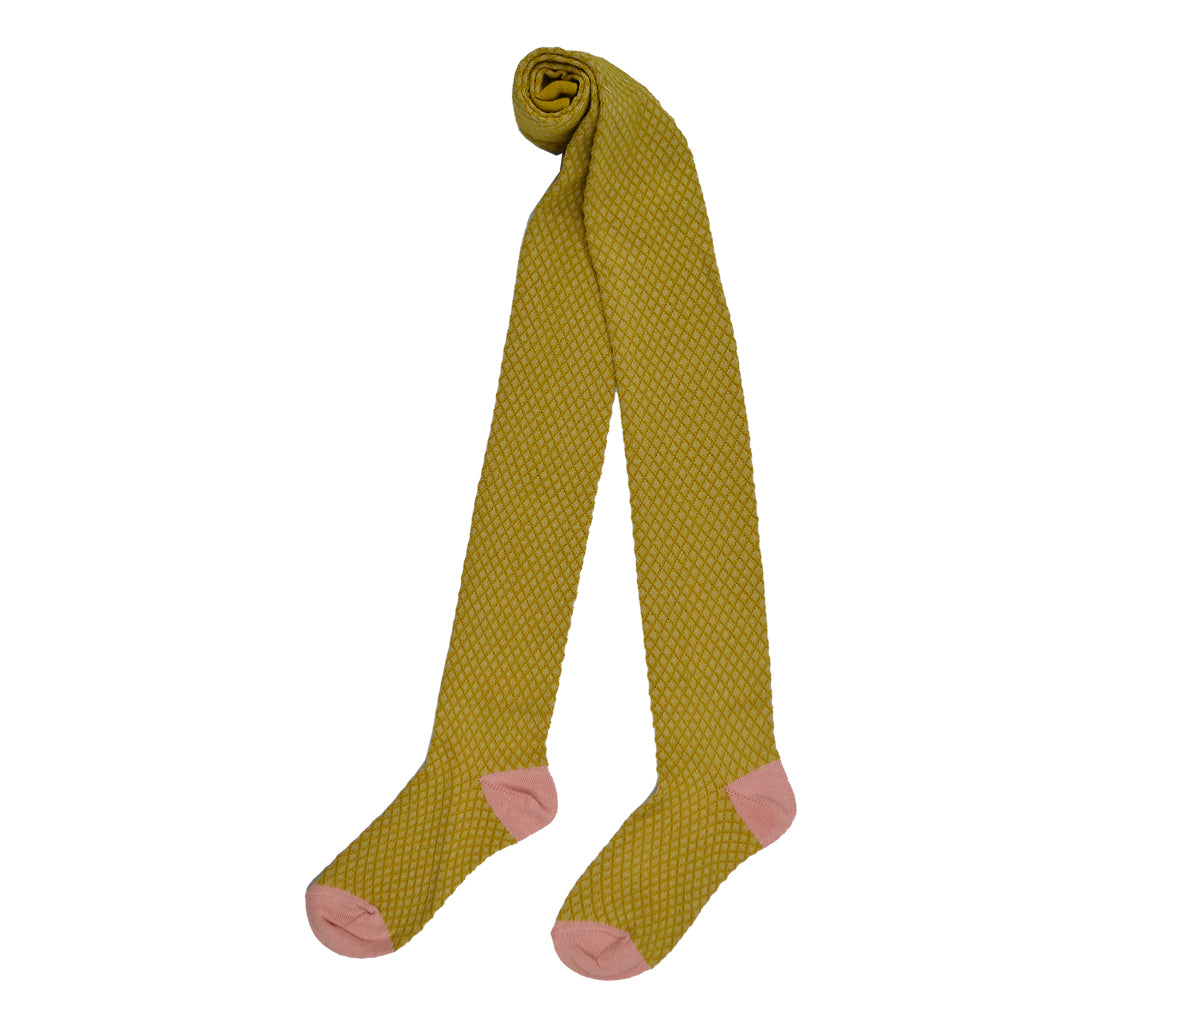 Baba Kidswear - Tights Mustard - Pink Foot